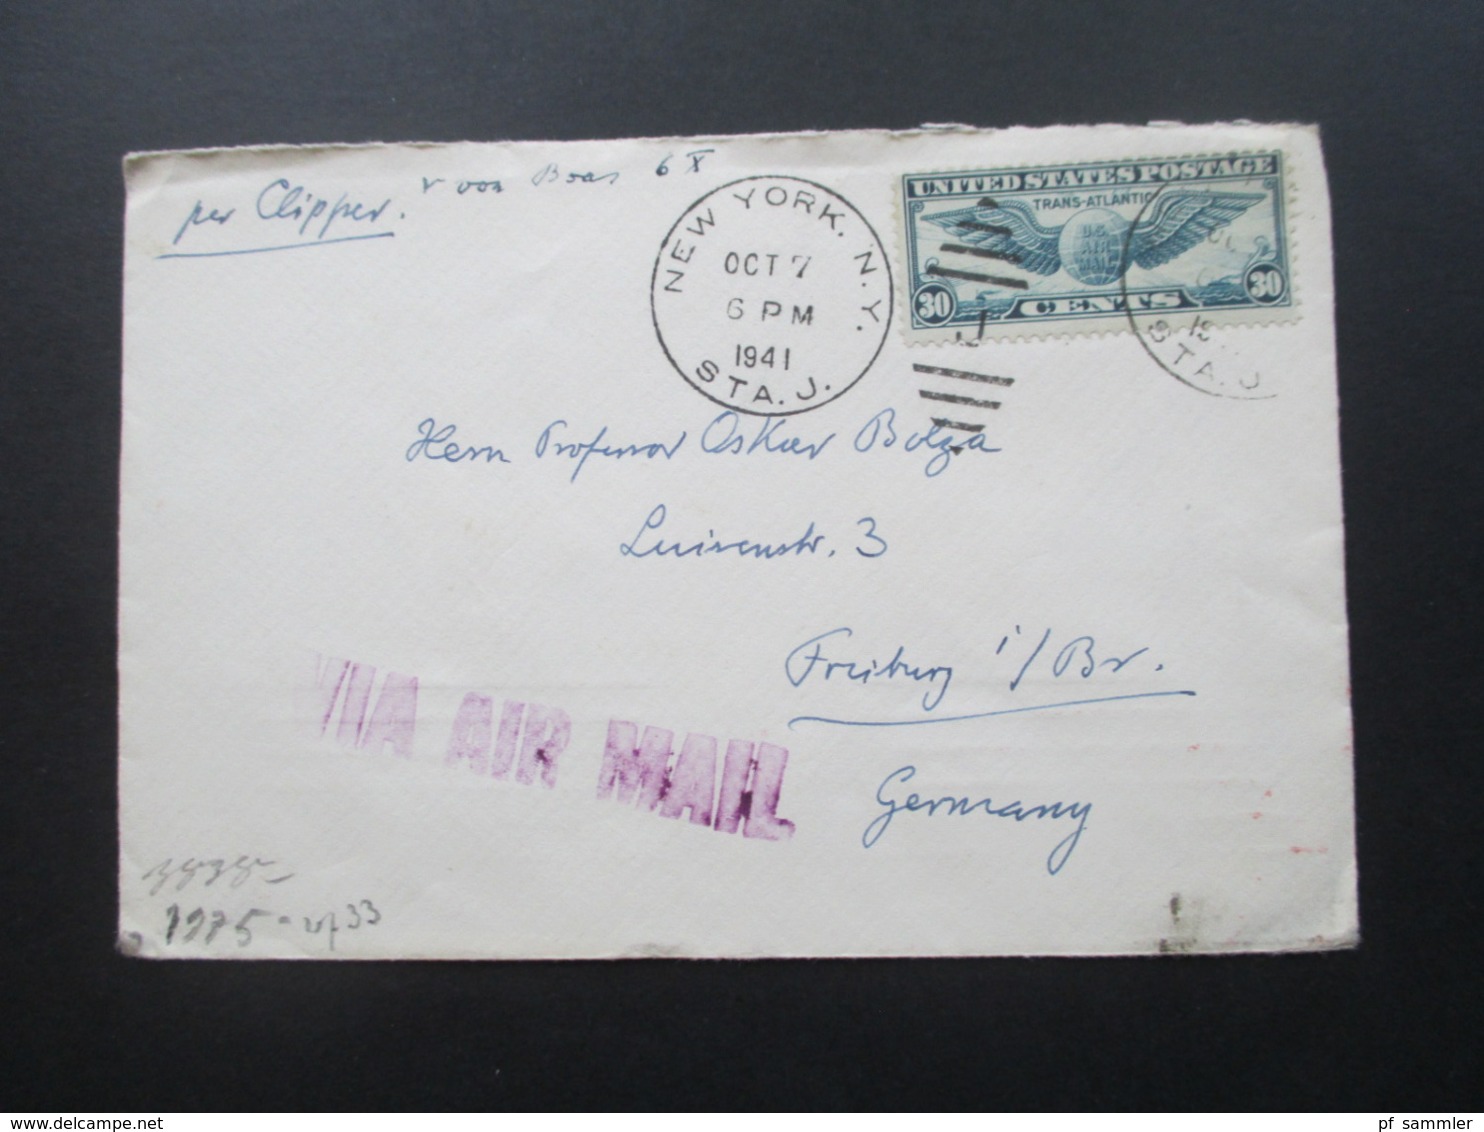 USA 1941 Zensurbeleg Mehrfachzensur OKW Air Mail Per Clipper Trans Atlantic Social Philately Dr.Oskar Bolza Mathematiker - Lettres & Documents